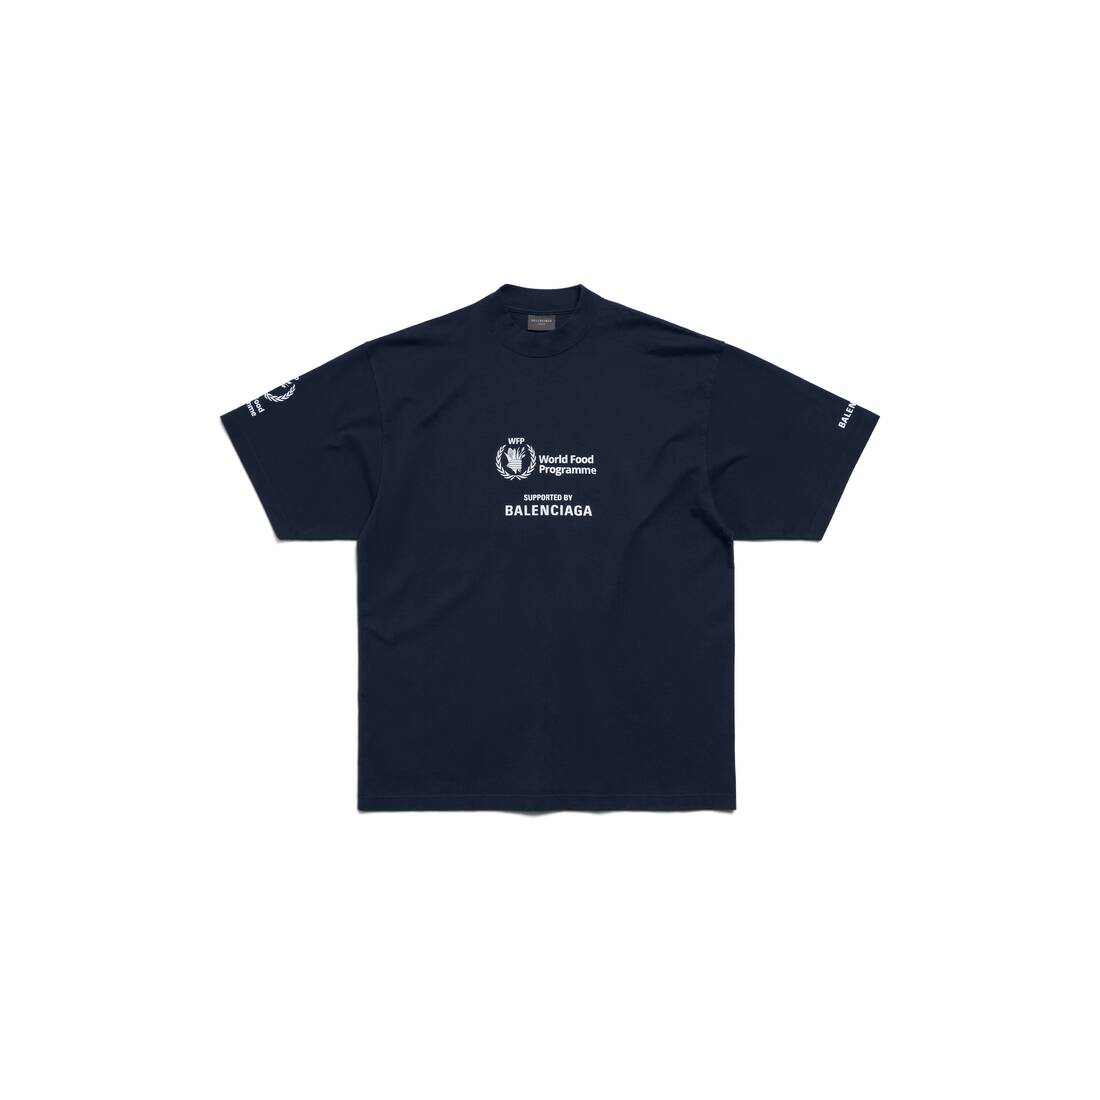 Wfp T-shirt Medium Fit in Dark Blue/white | Balenciaga US